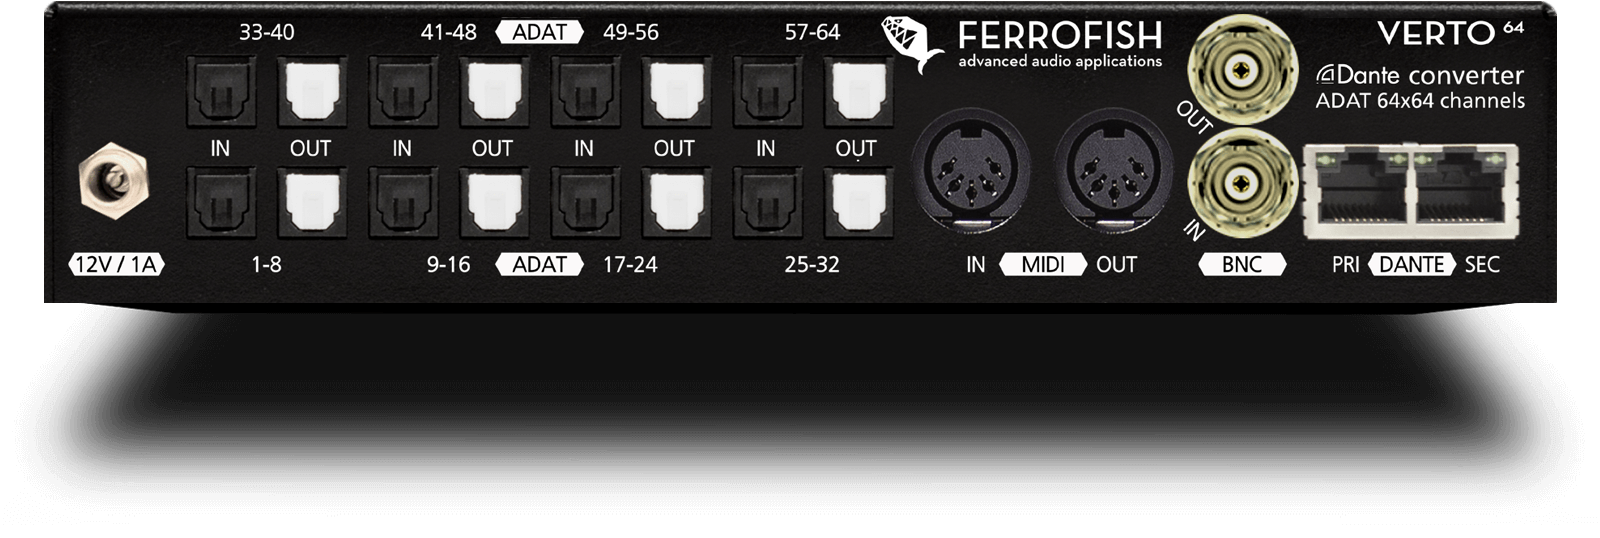 Ferrofish | VERTO64 | 64 x 64 ADAT <> Dante Converter